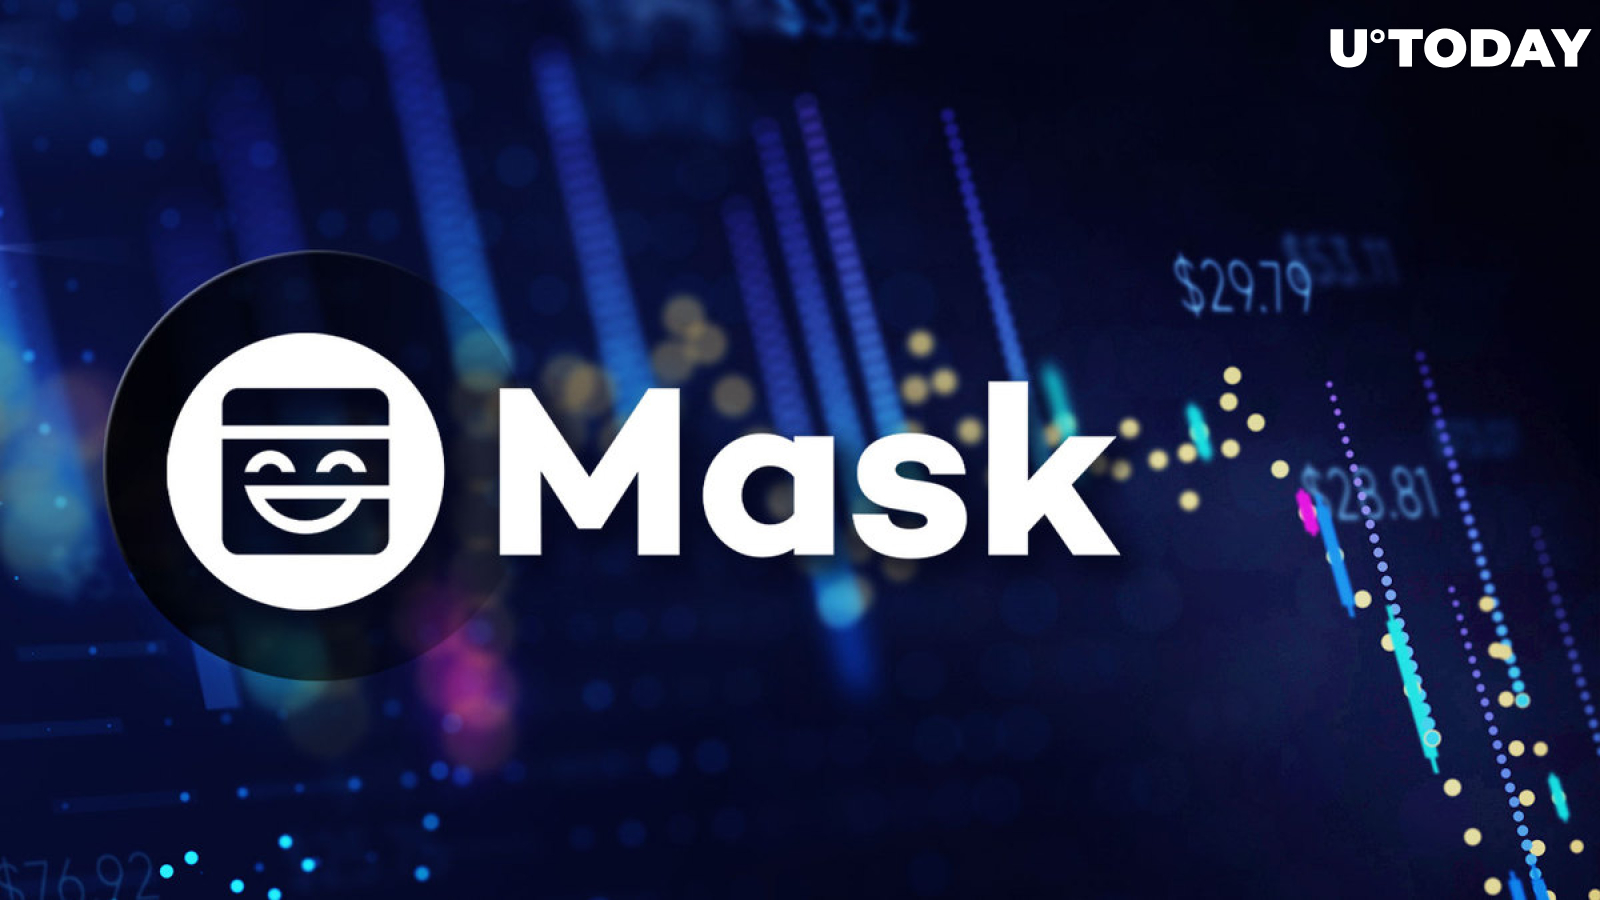 Mask Network (MASK) Drops 8% Following Massive Token Move to Binance